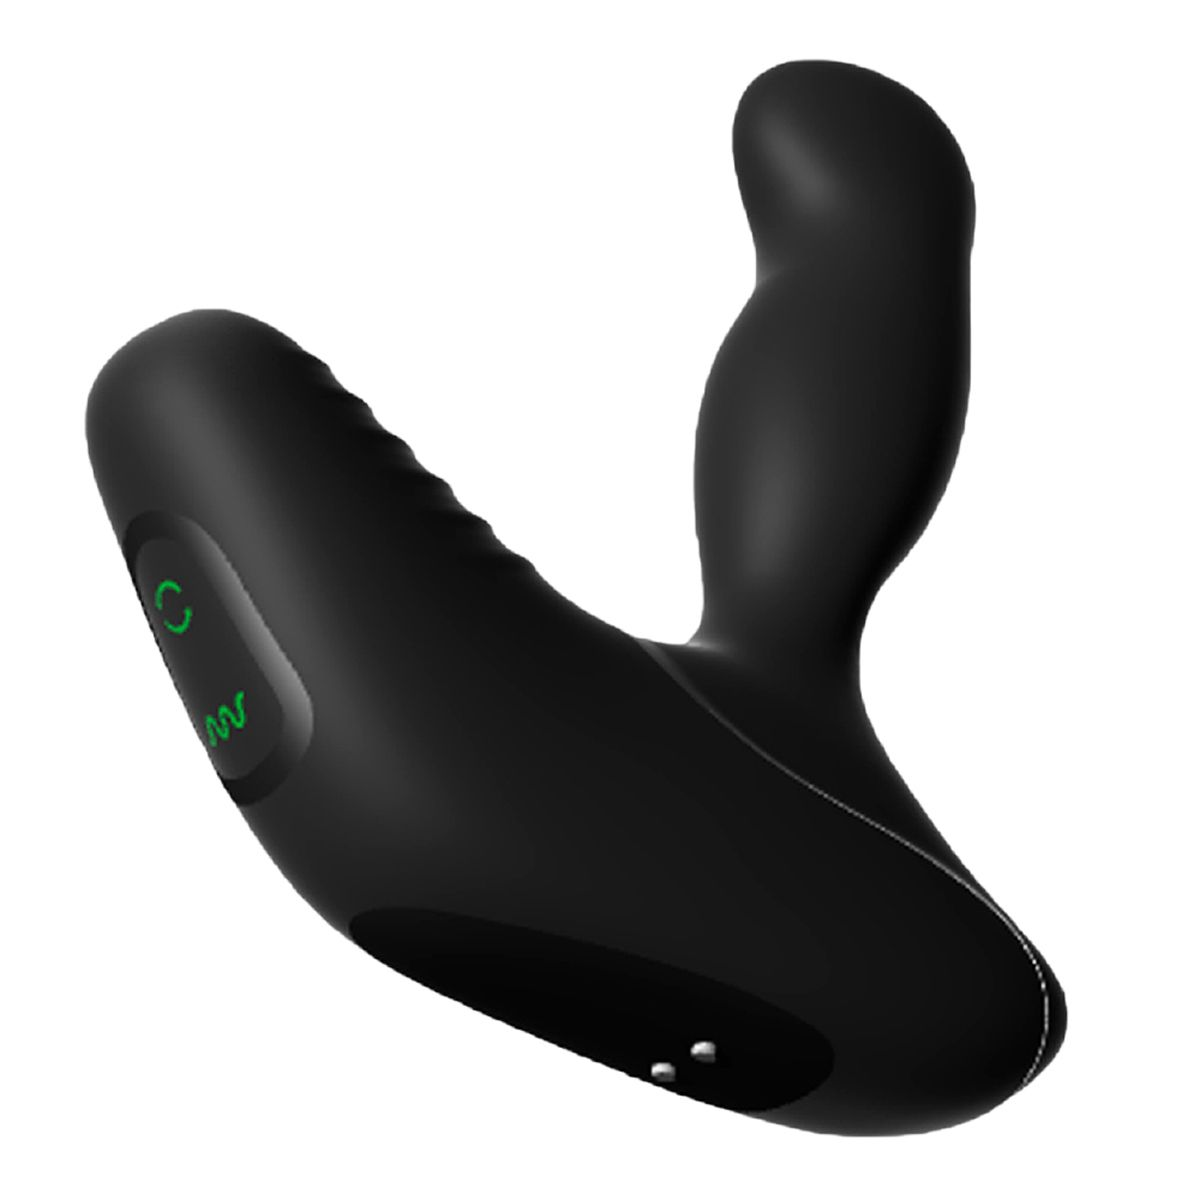 NEXUS Nexus Revo Rotating Schwarz - analvibratoren Prostata Vibrator